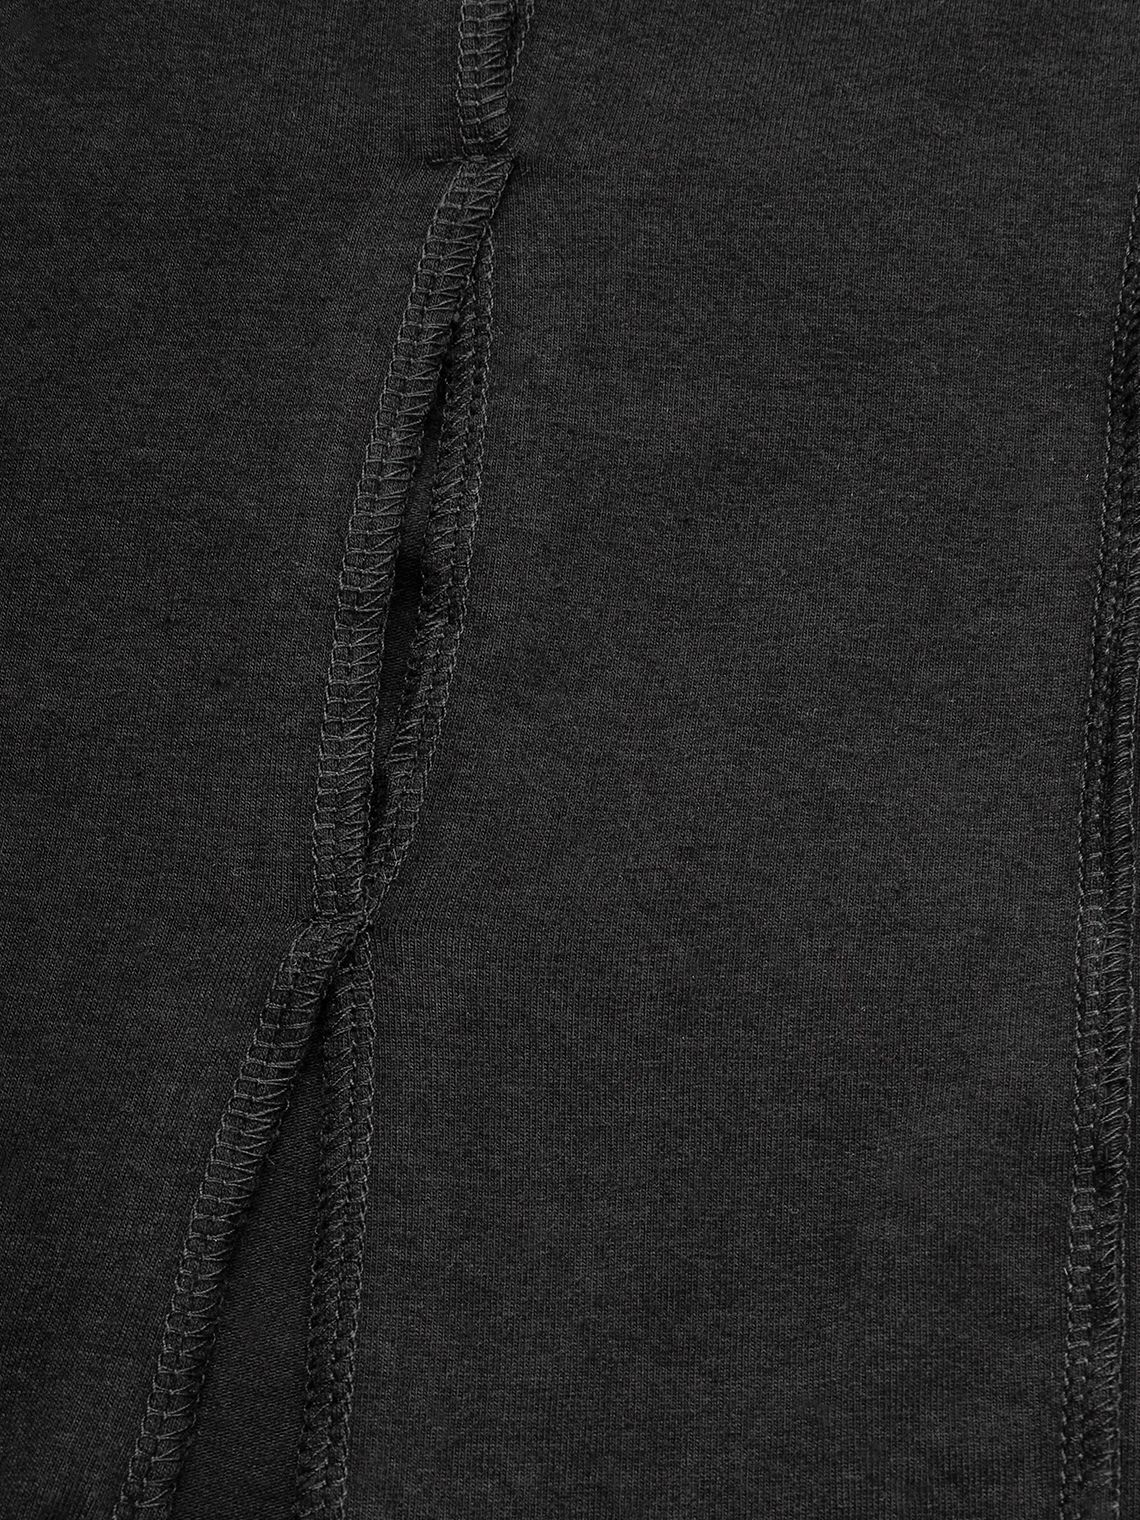 【Final Sale】Street Casual Black Top T-Shirt